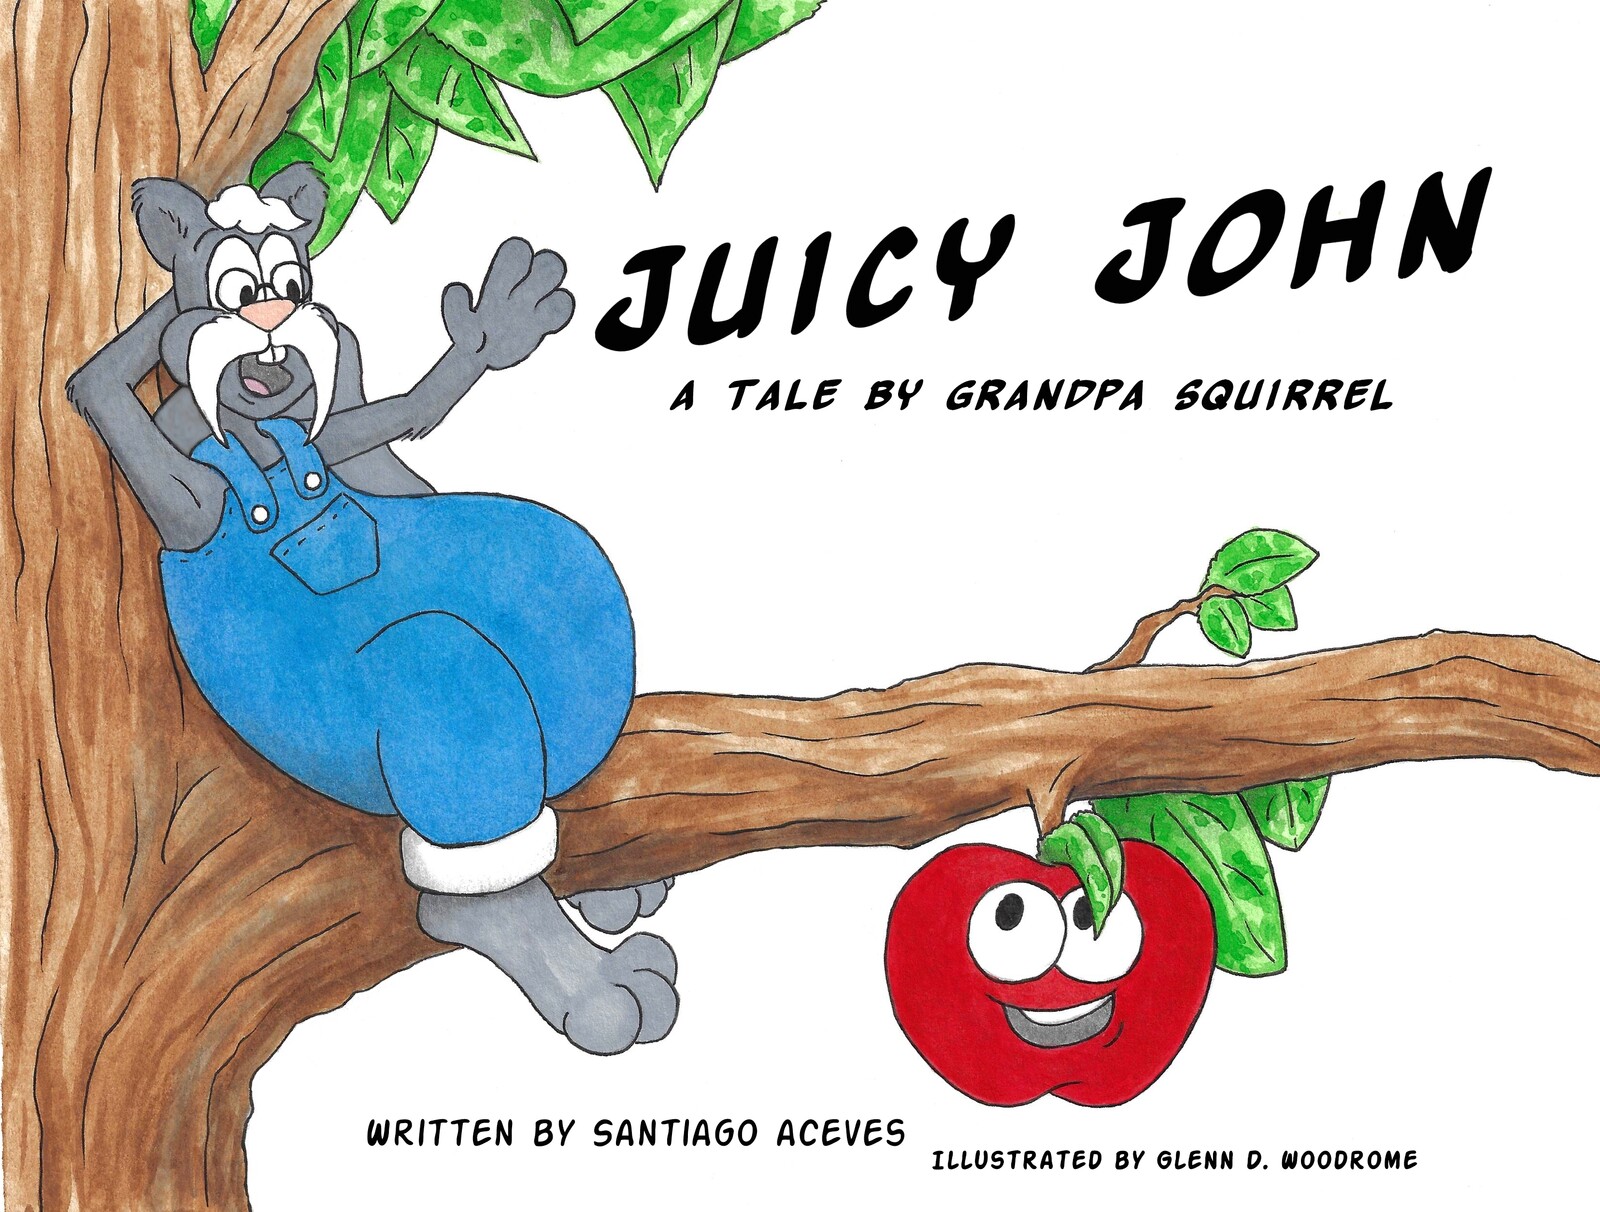 "Juicy John" cover art illustration